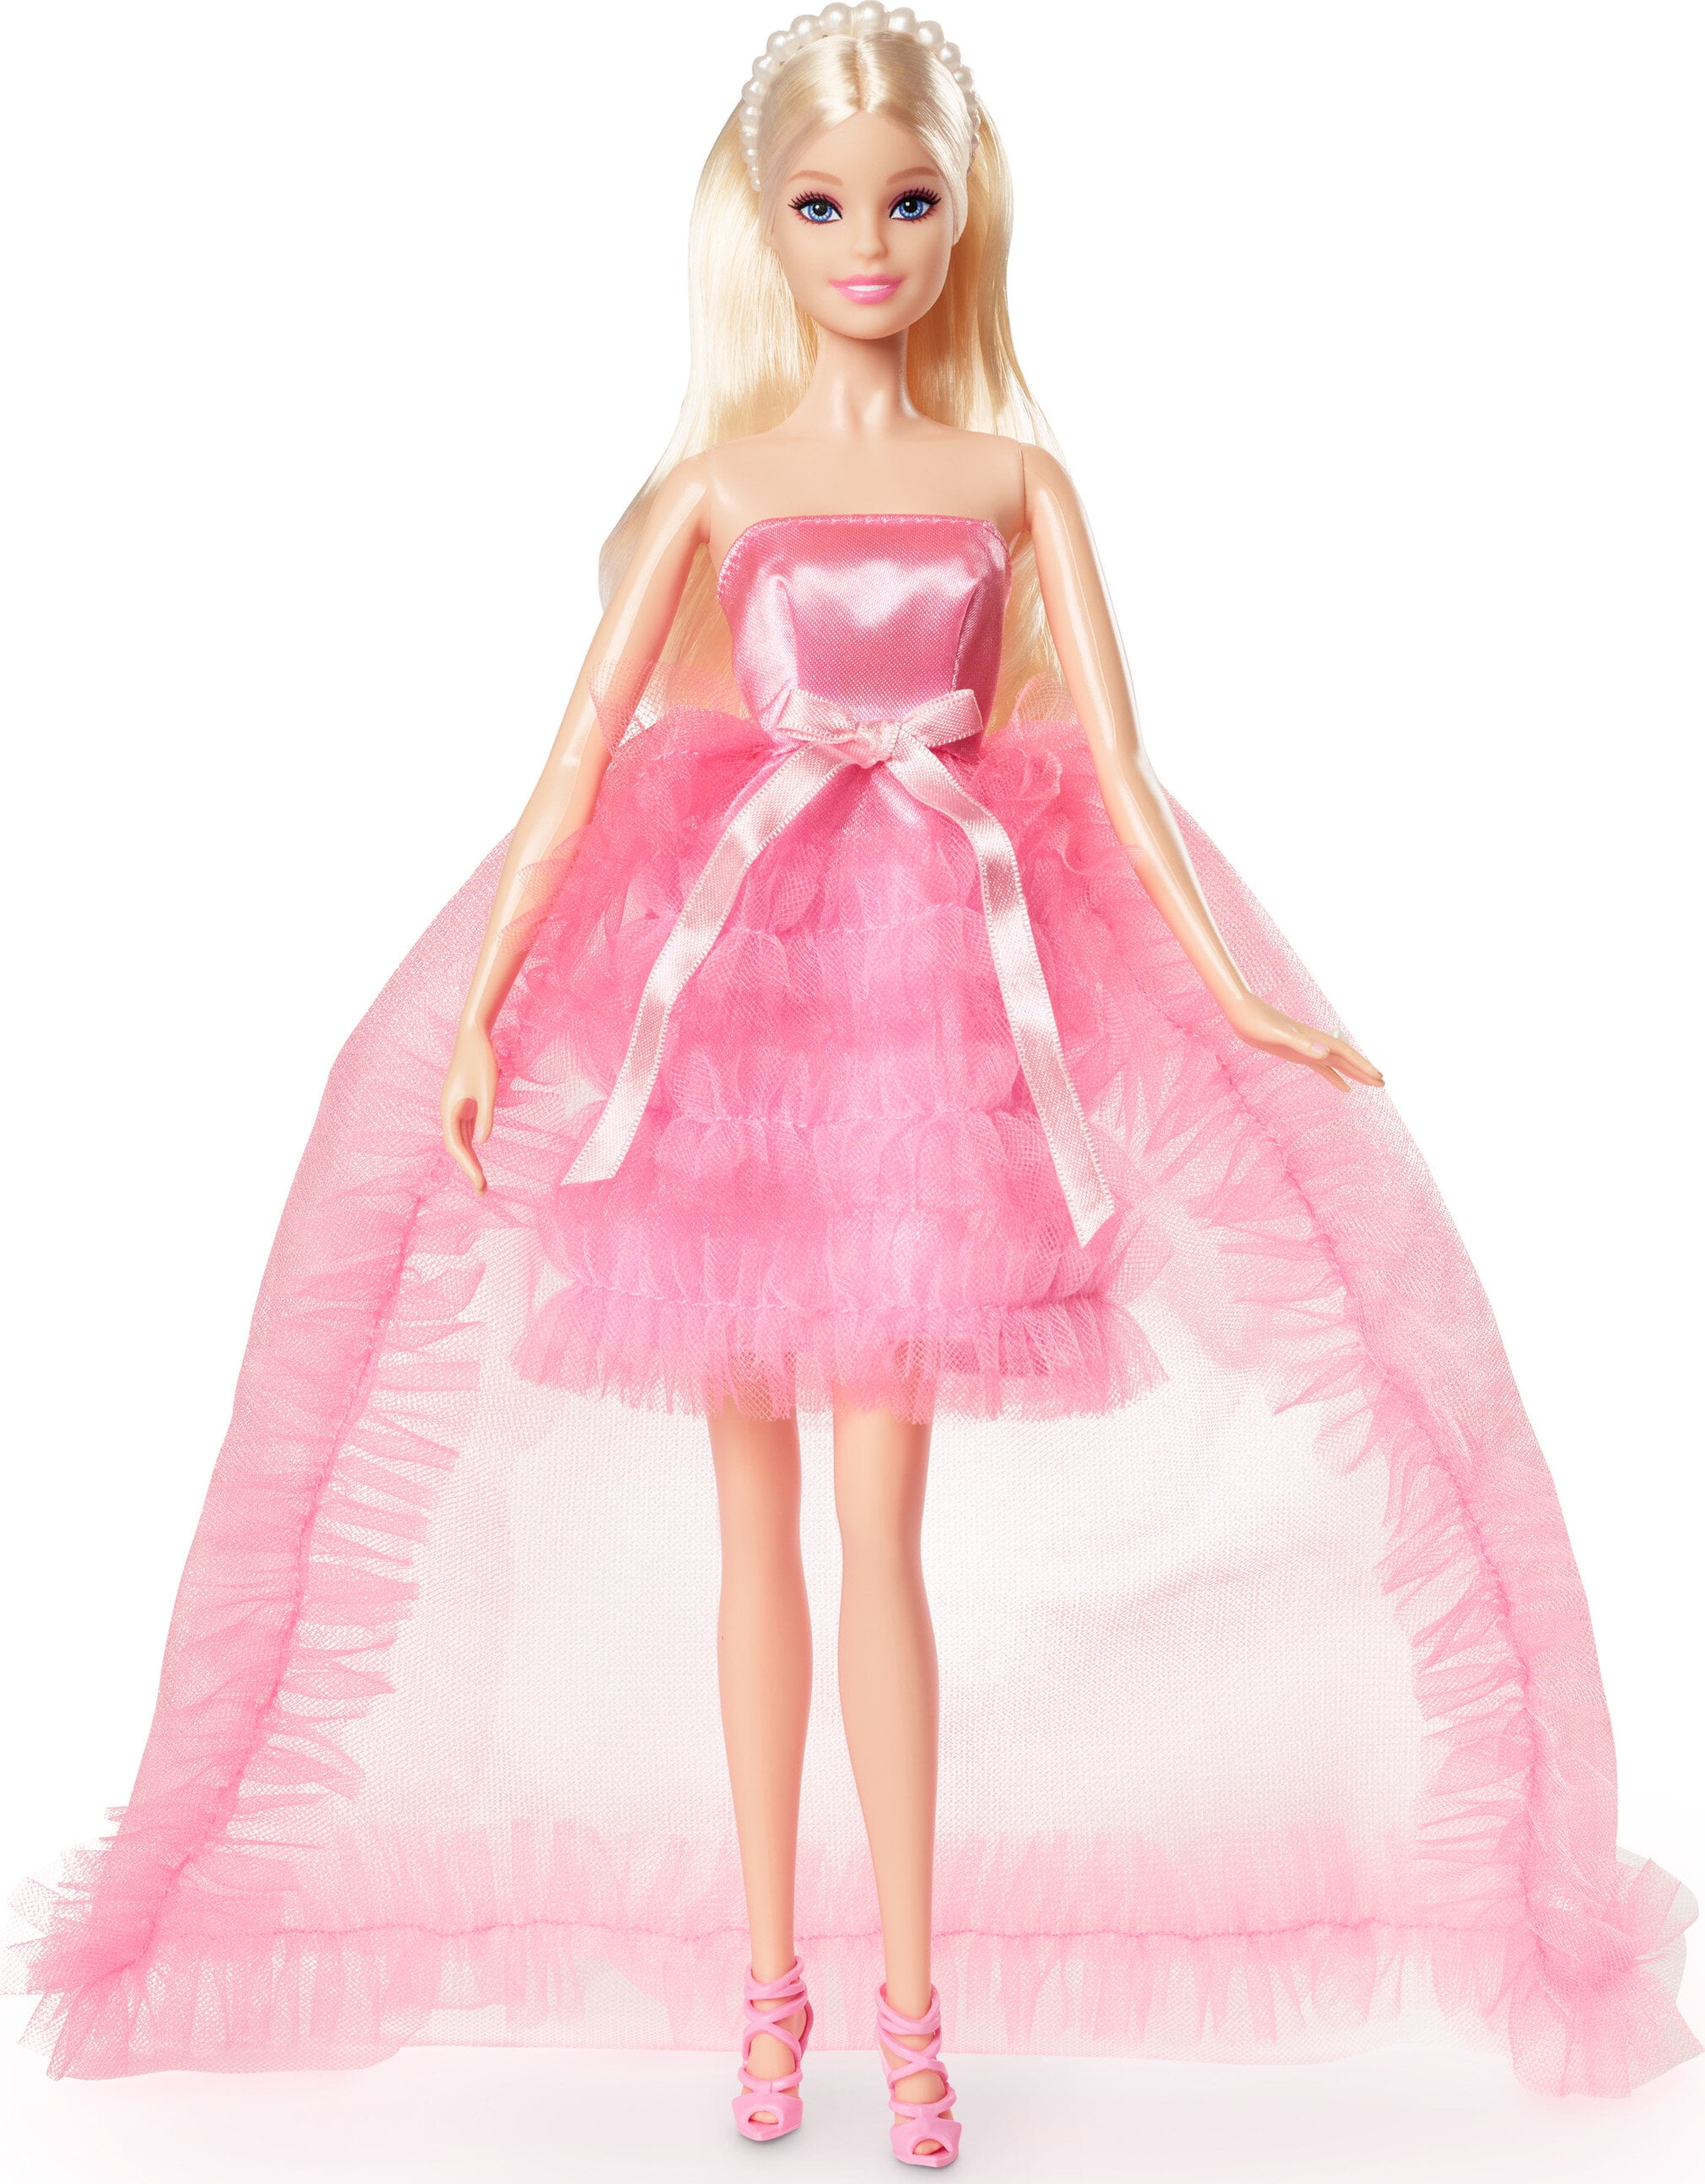 barbie in pink dress